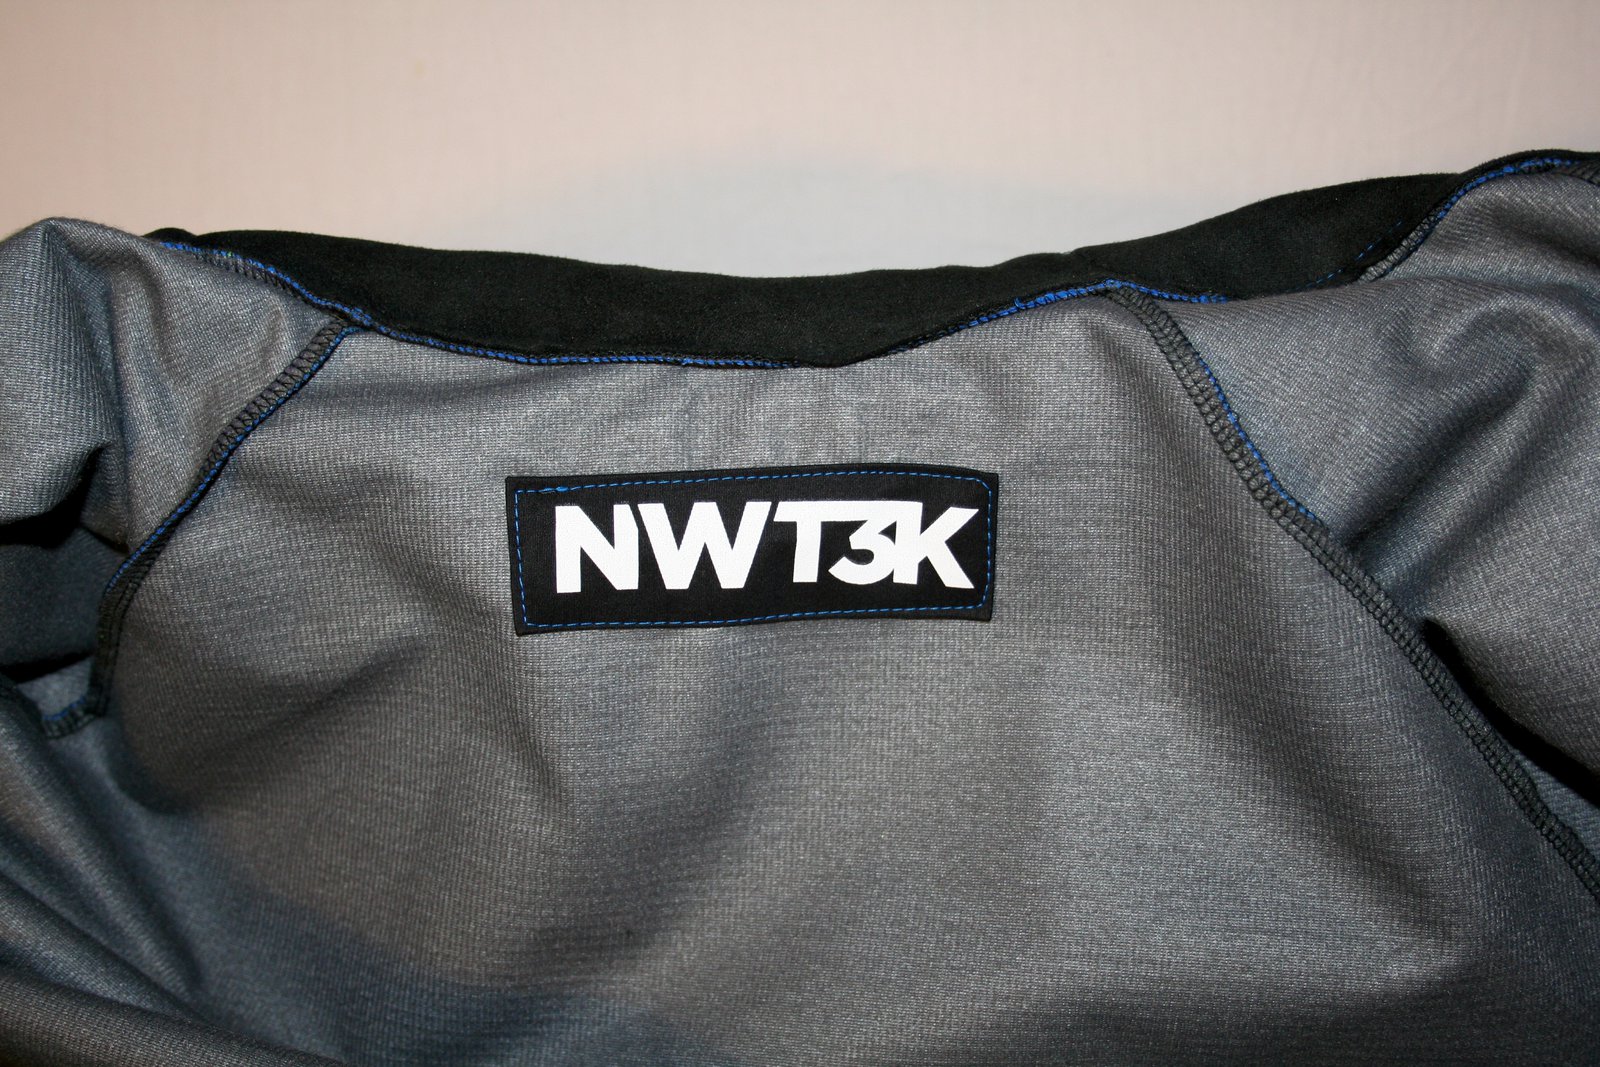 NWT3K Outerwear